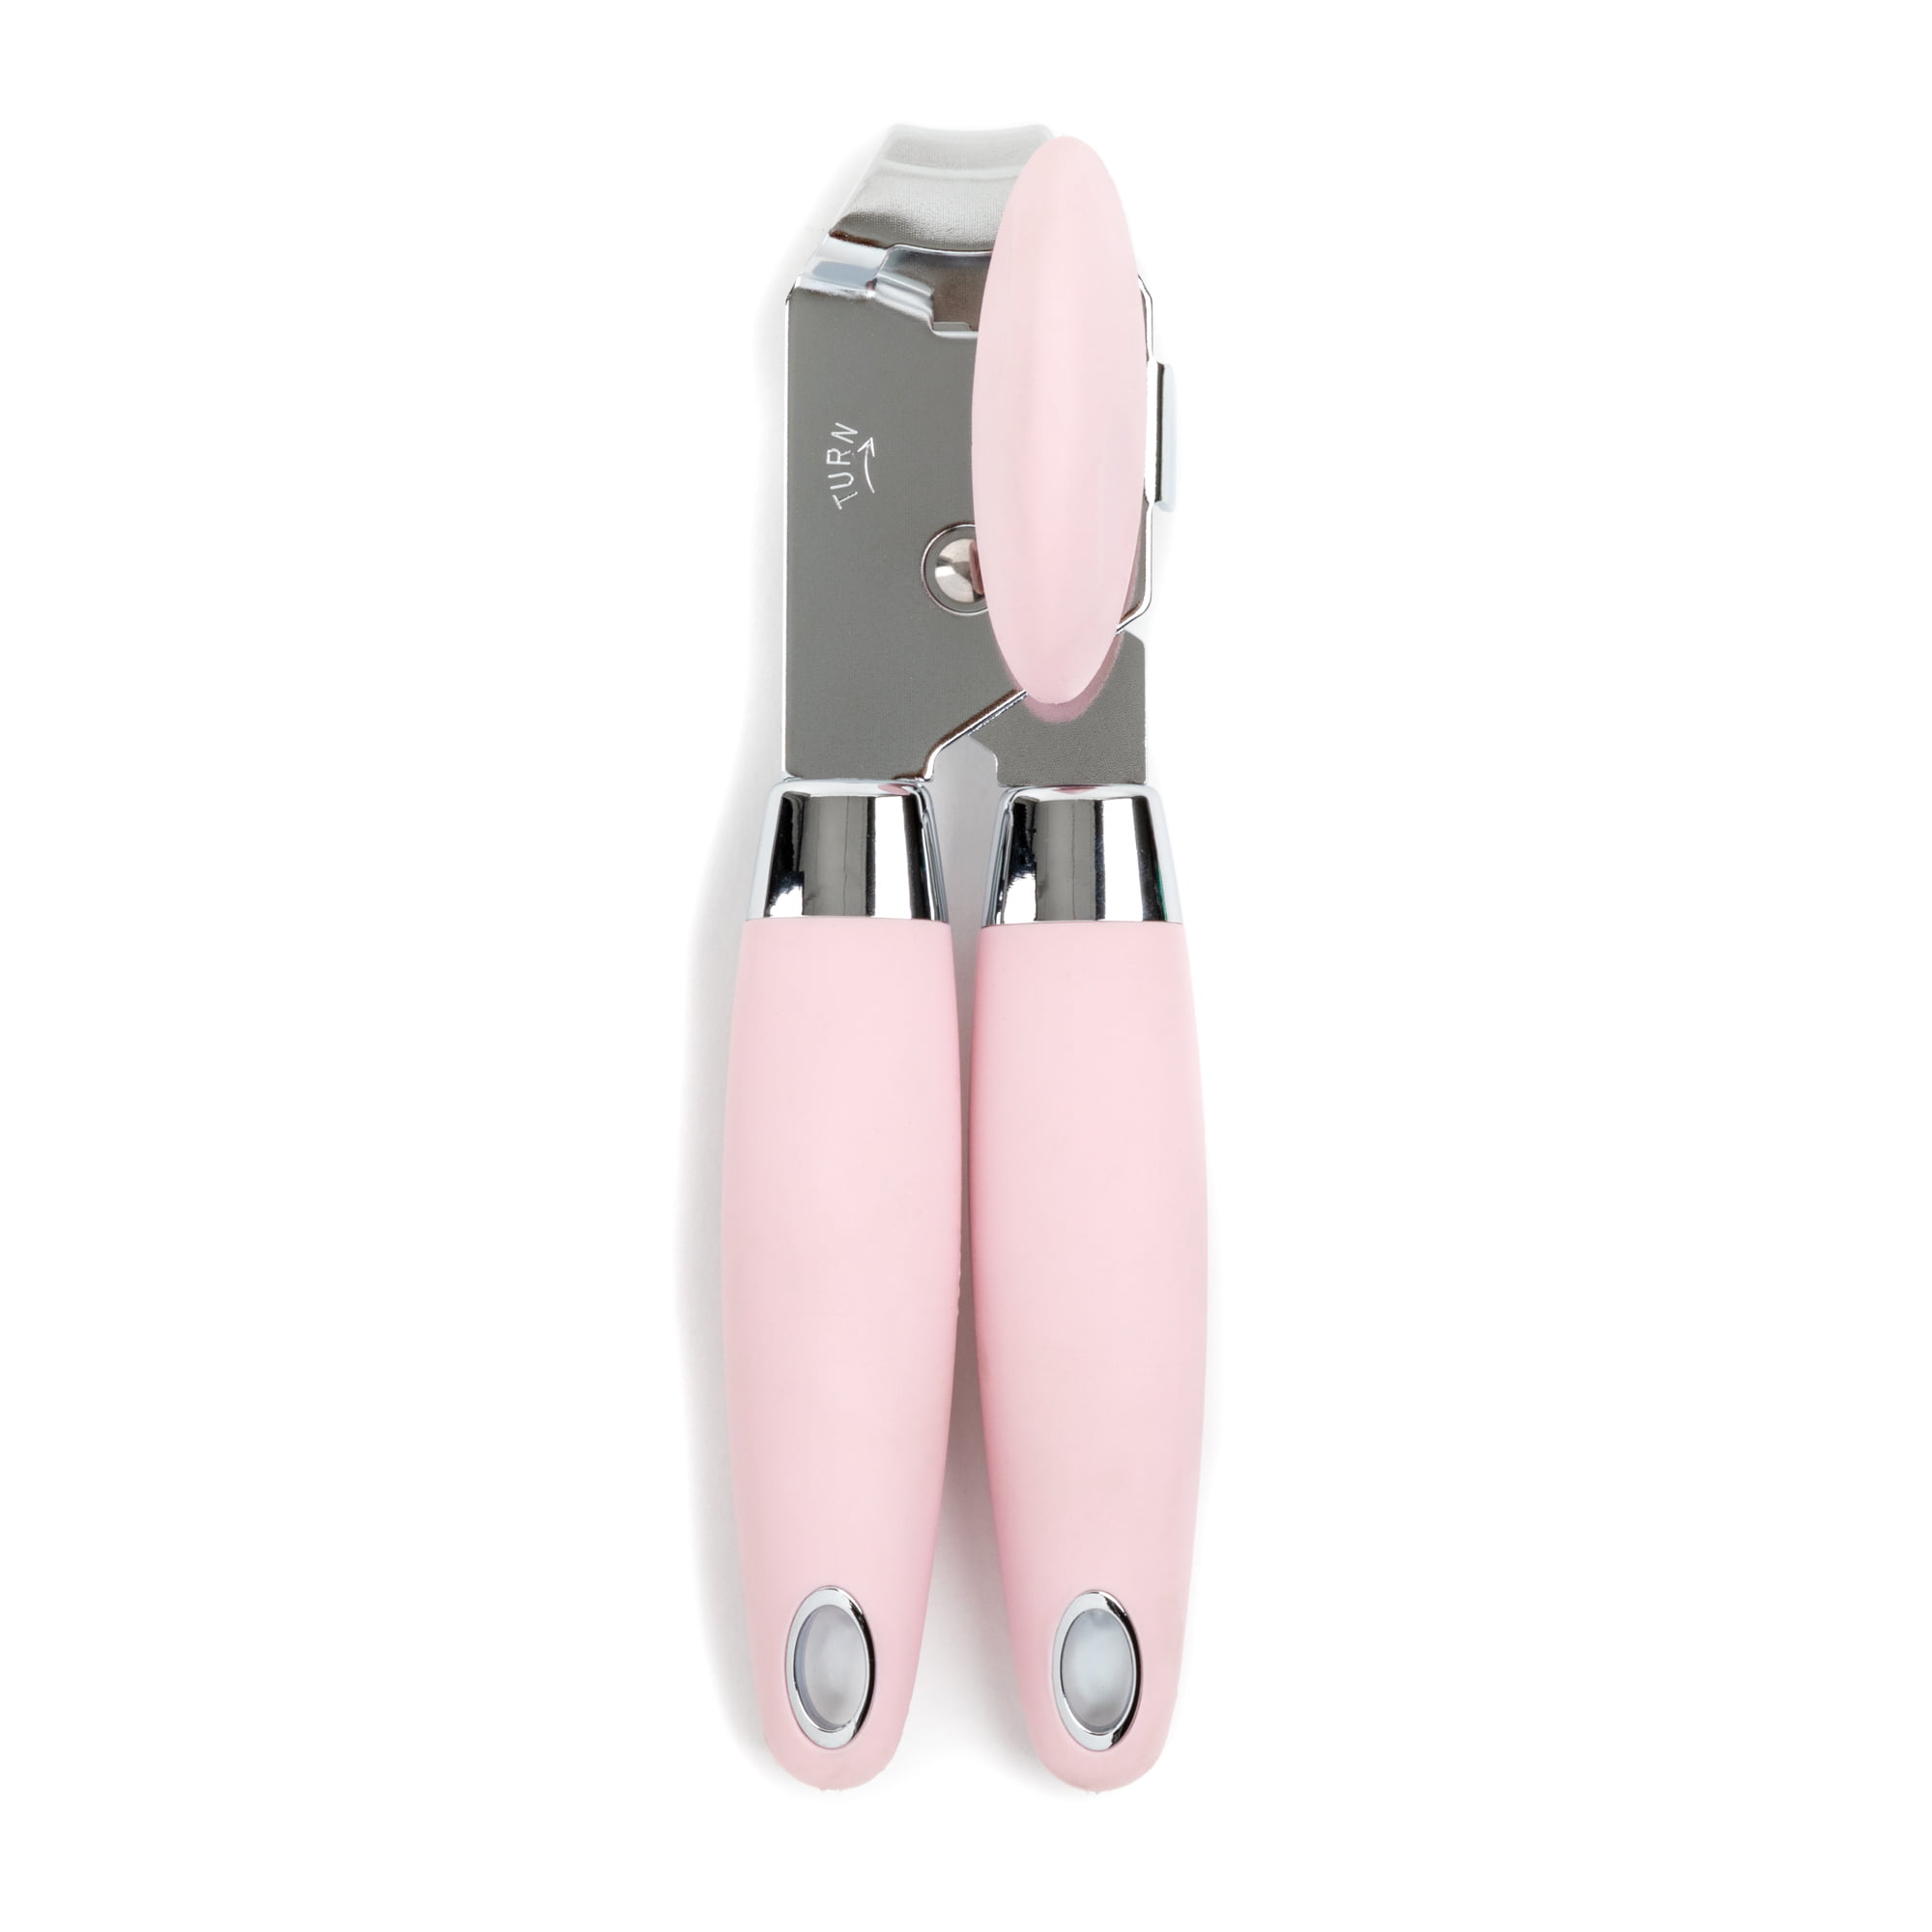 casapinka: Pink can opener